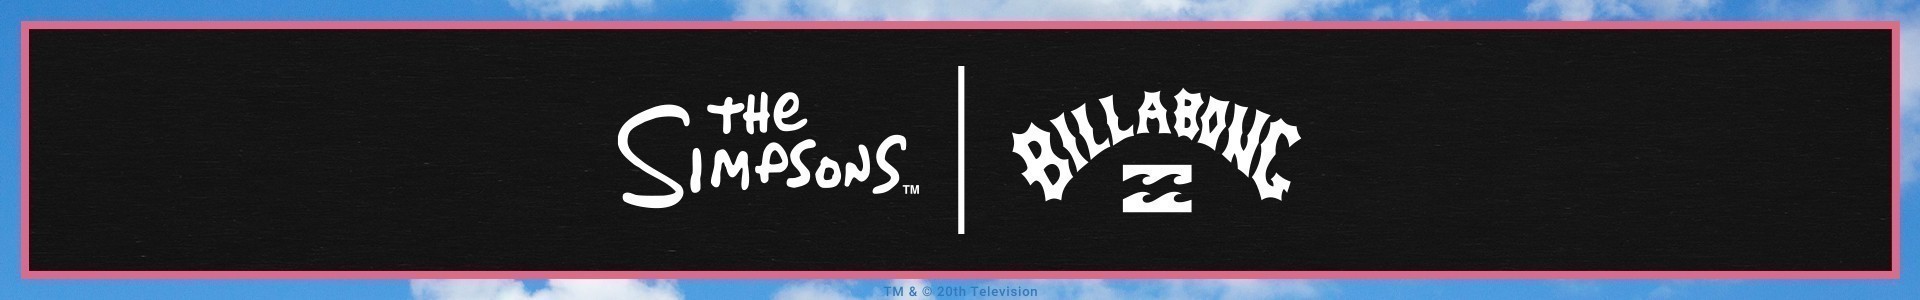 Men's Billabong x Simpsons Collection 